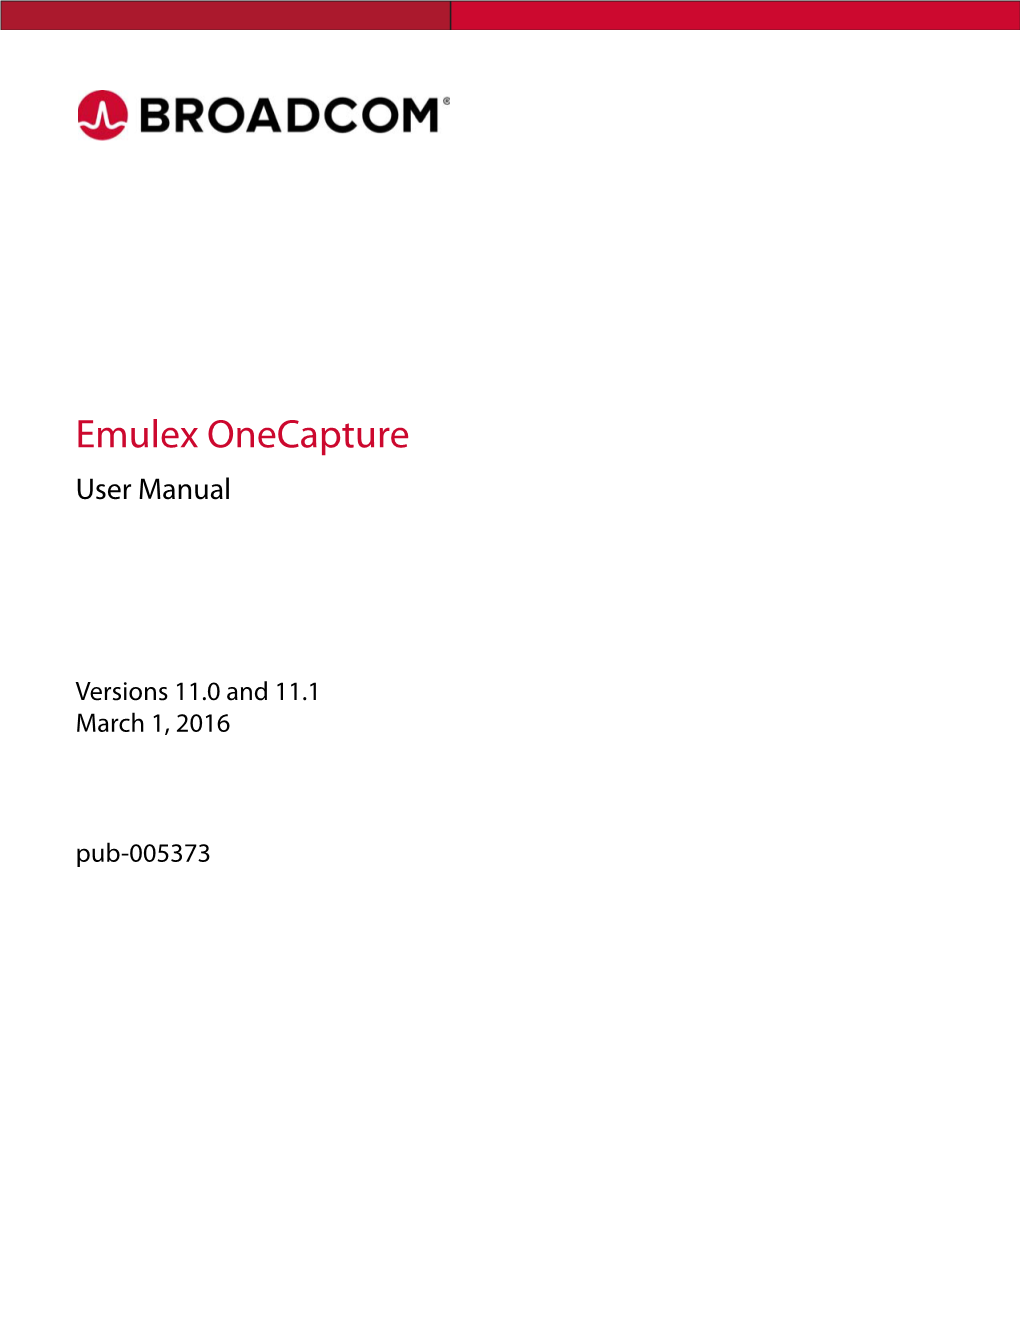 Emulex Onecapture User Manual